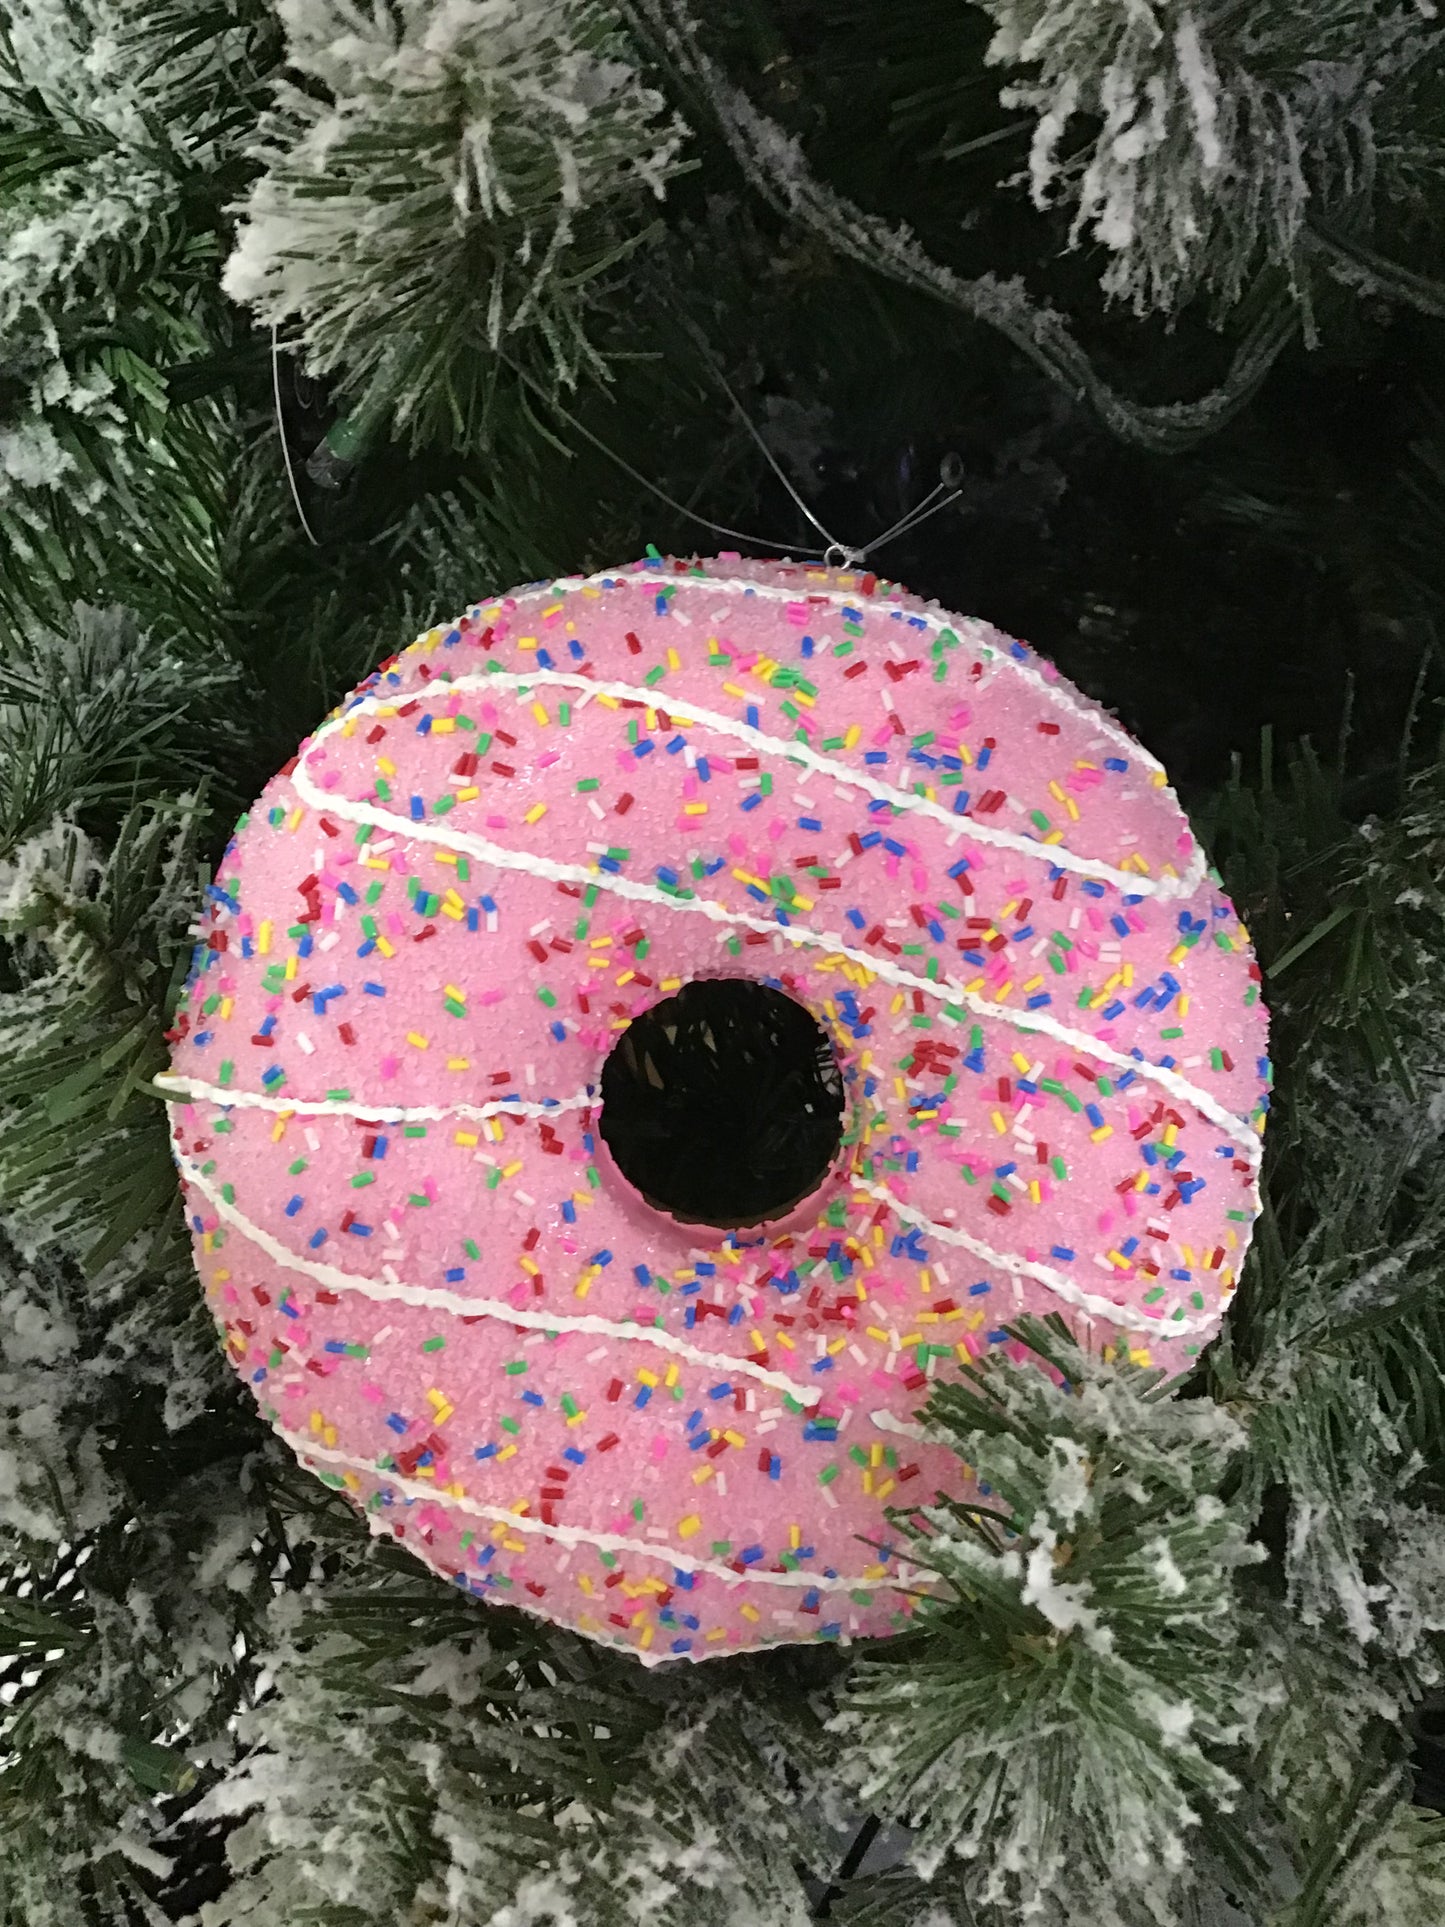 Pink Sprinkle Covered Donut Ornament